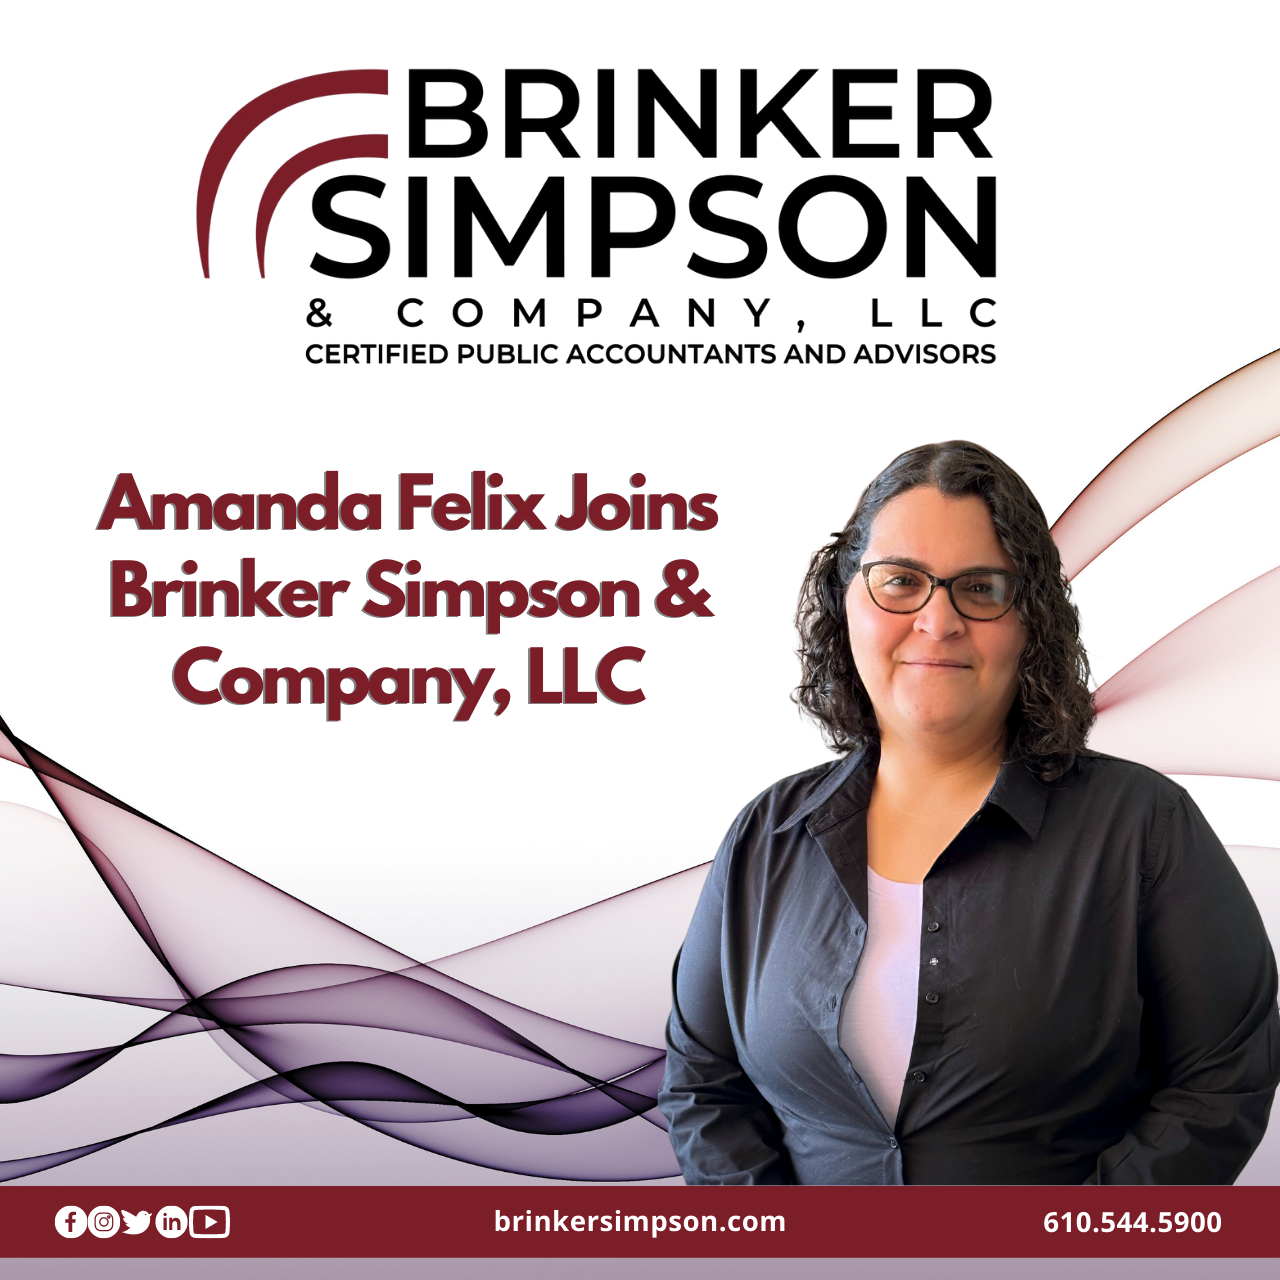 Amanda Felix Joins Brinker Simpson & Company, LLC